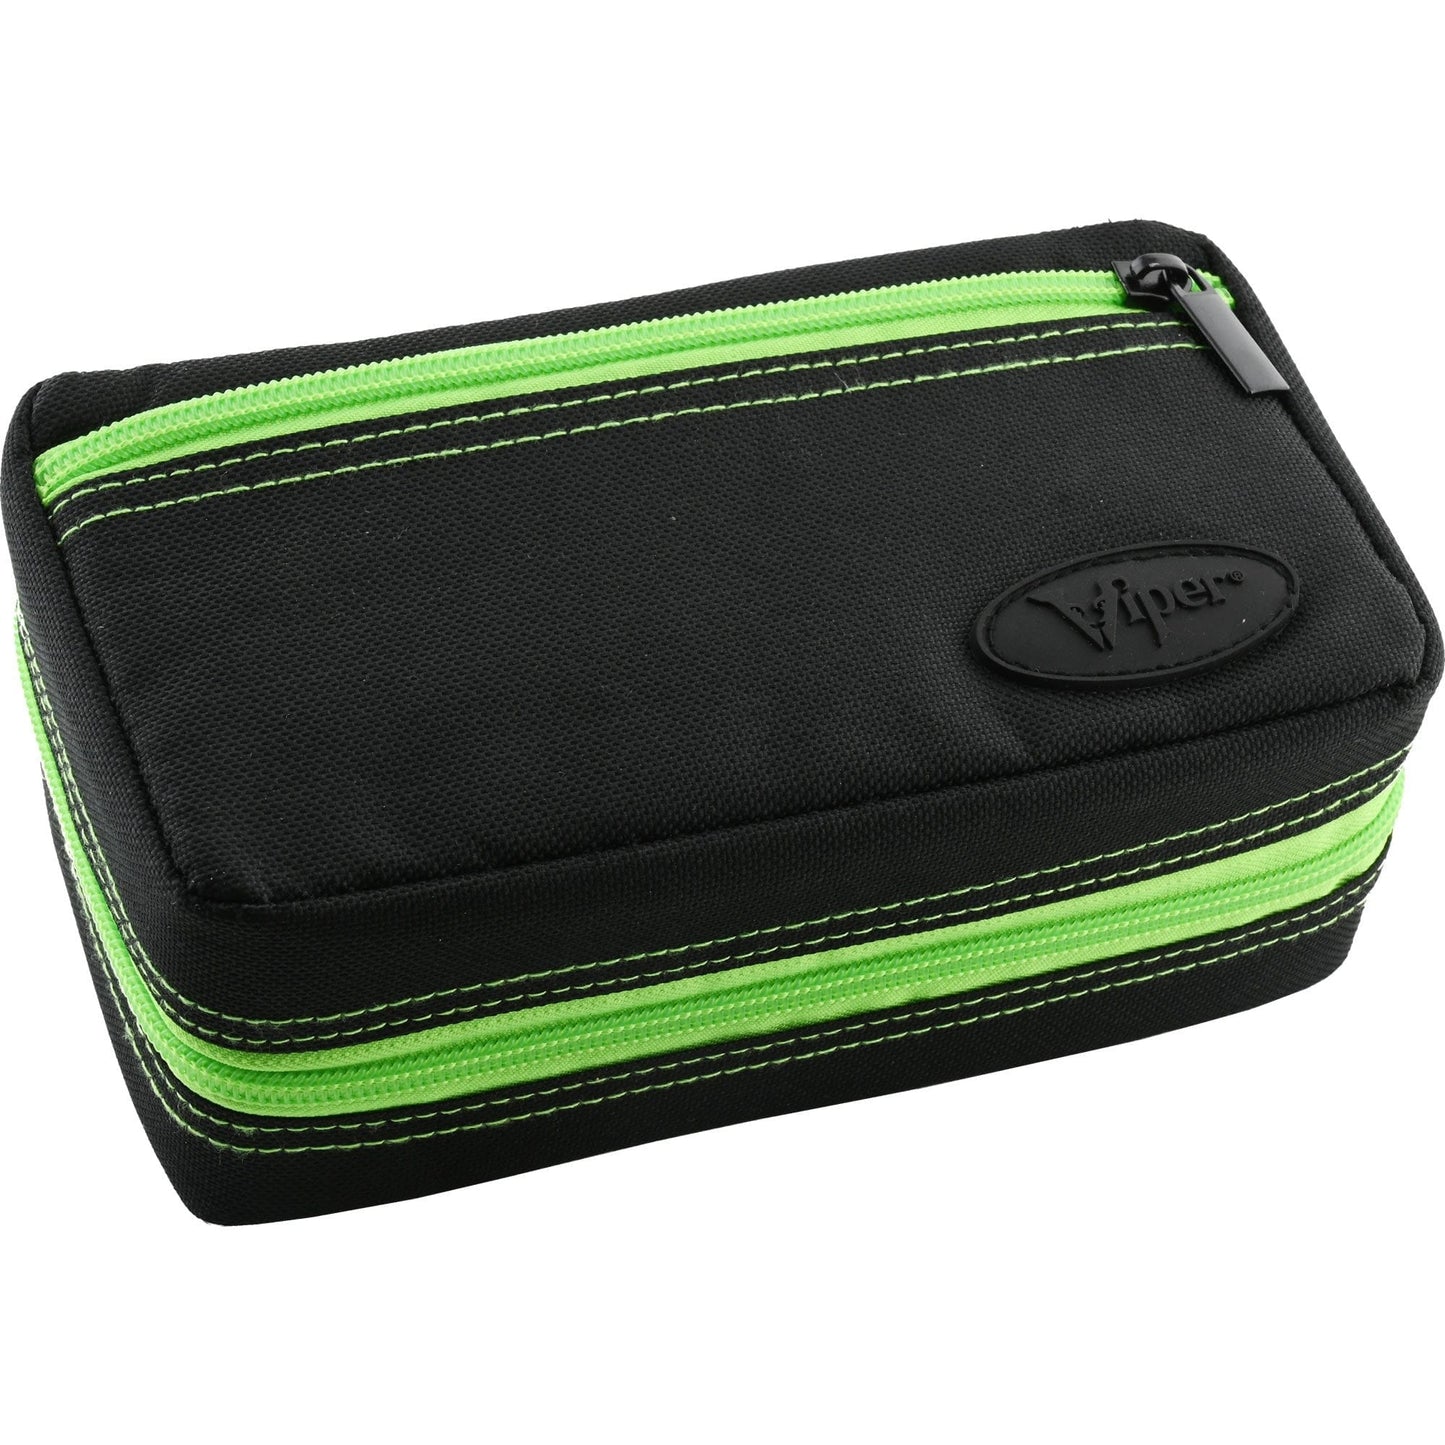 Viper Plazma Pro Dart Case - Extremely Tough & Durable Green